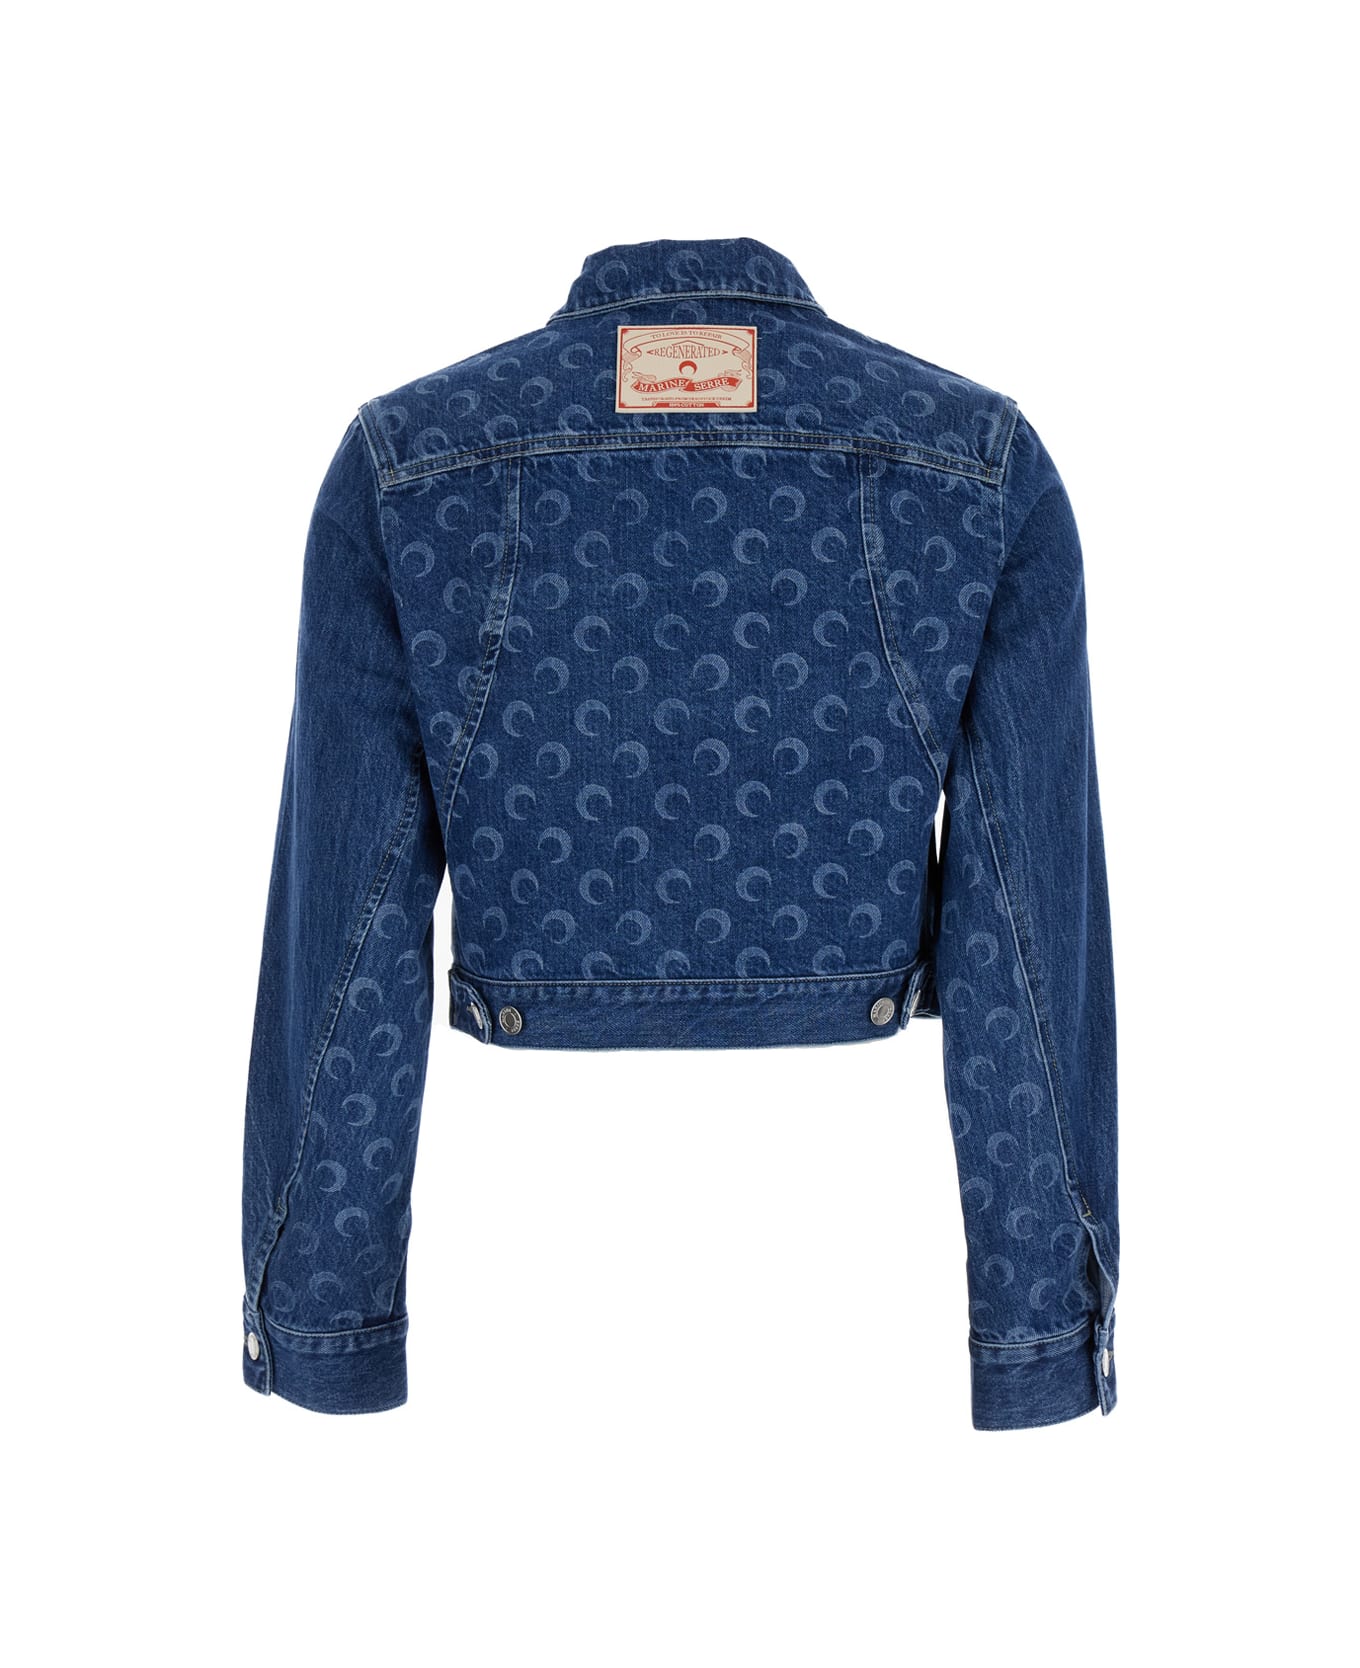 Marine Serre Blue Denim Jacket With All-over Moongram Pattern In Cotton Woman - Blu